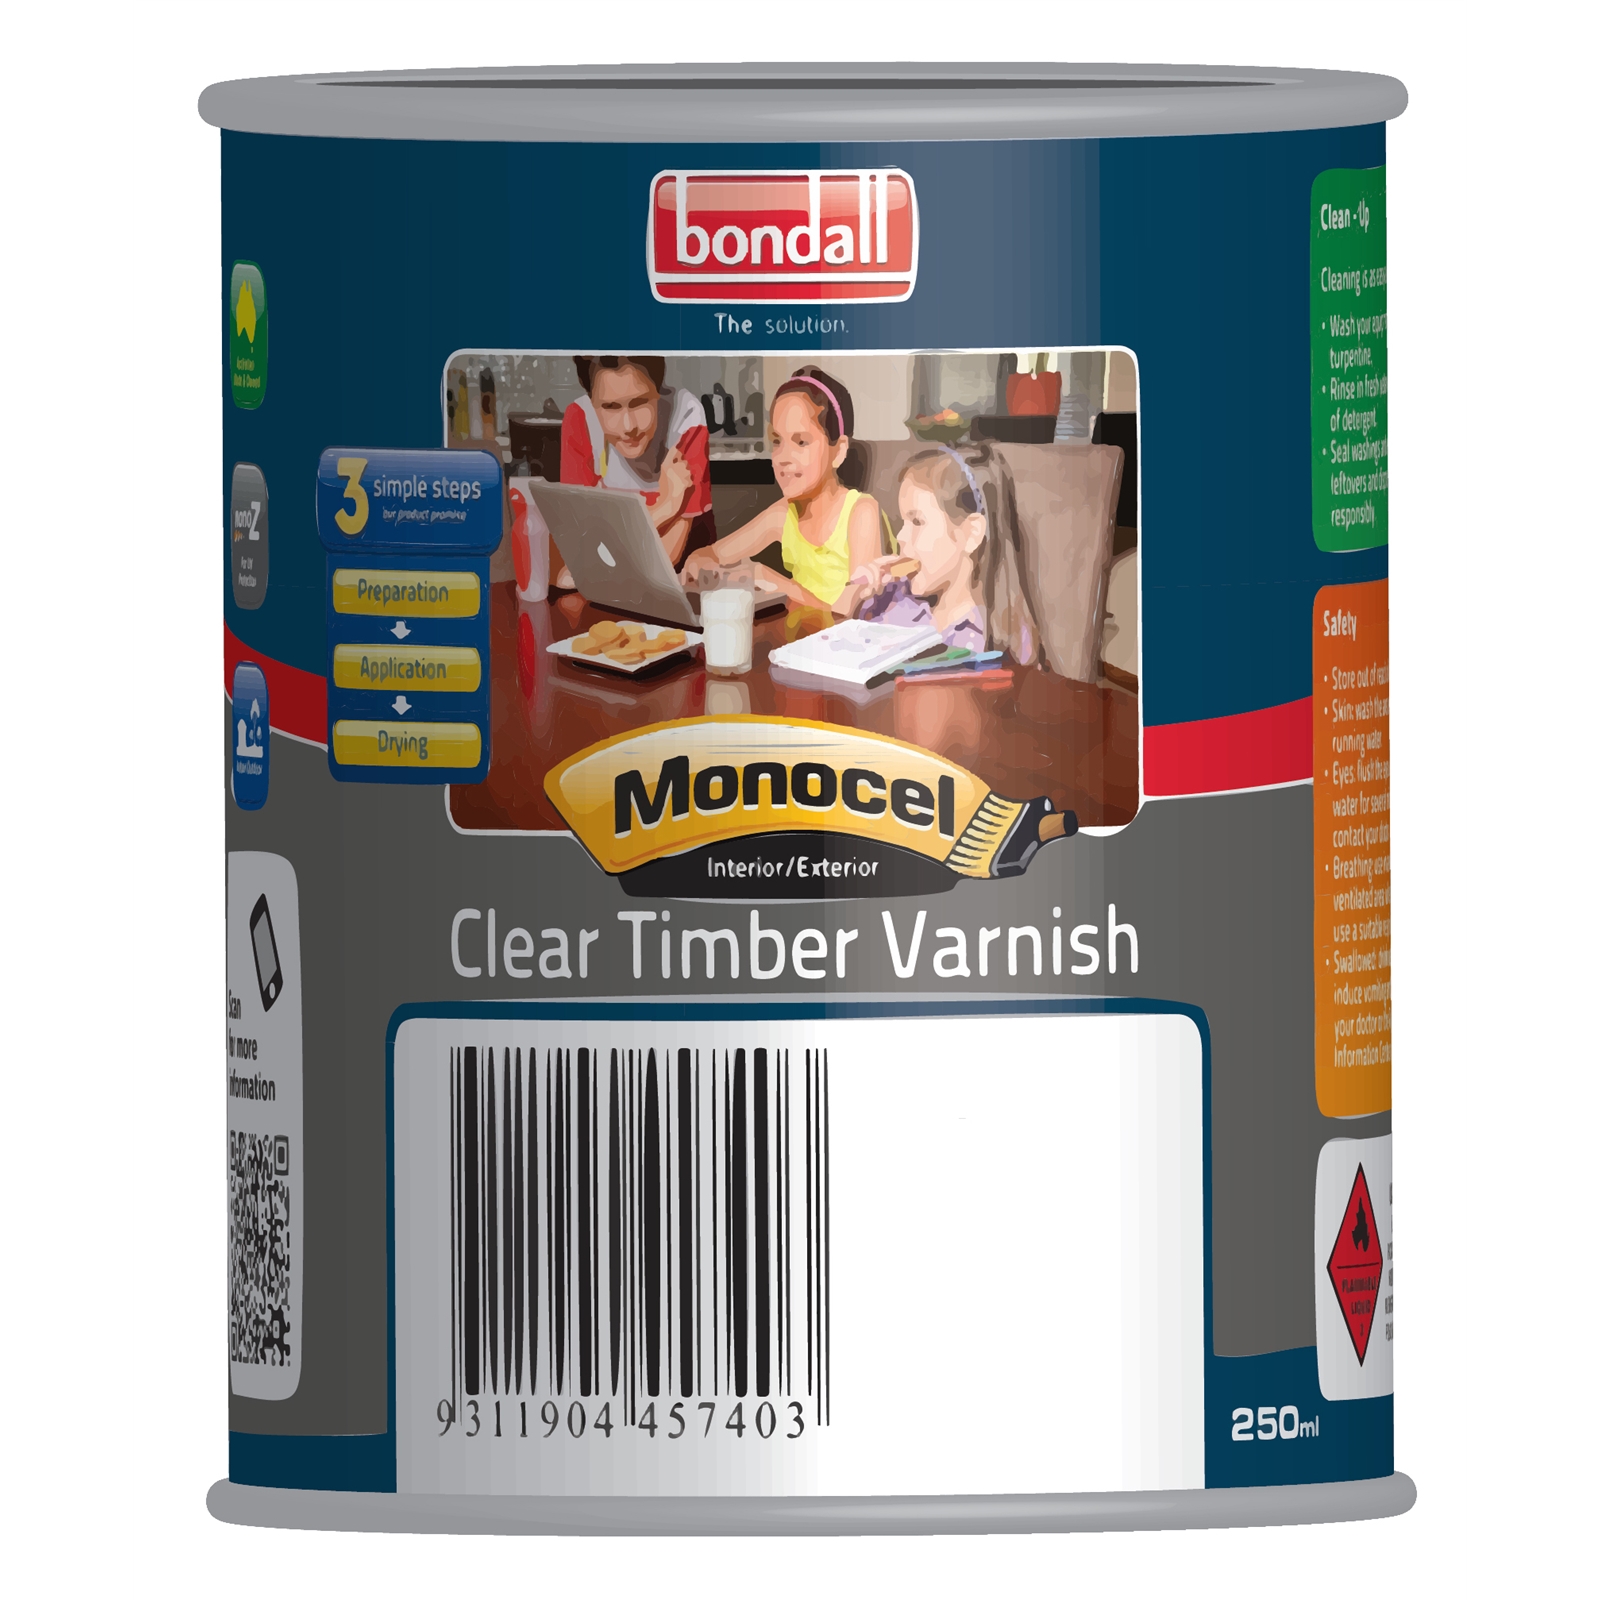 Bondall 250ml Gloss Monocel Clear Timber Varnish